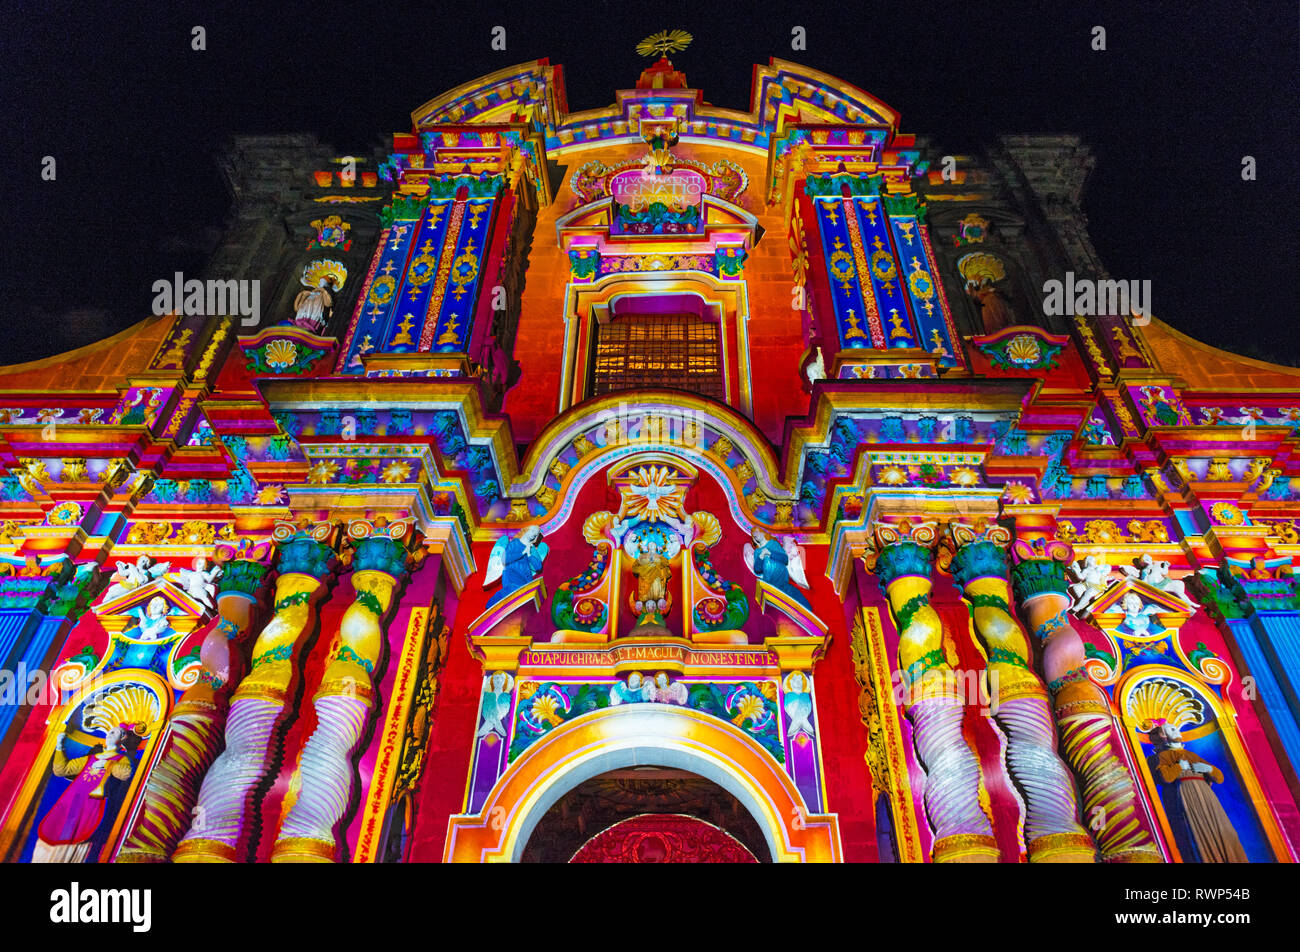 The baroque style facade of the Jesuit church of the Compania de Jesus illuminated with colours in the historic city center of Quito, Ecuador. Stock Photo